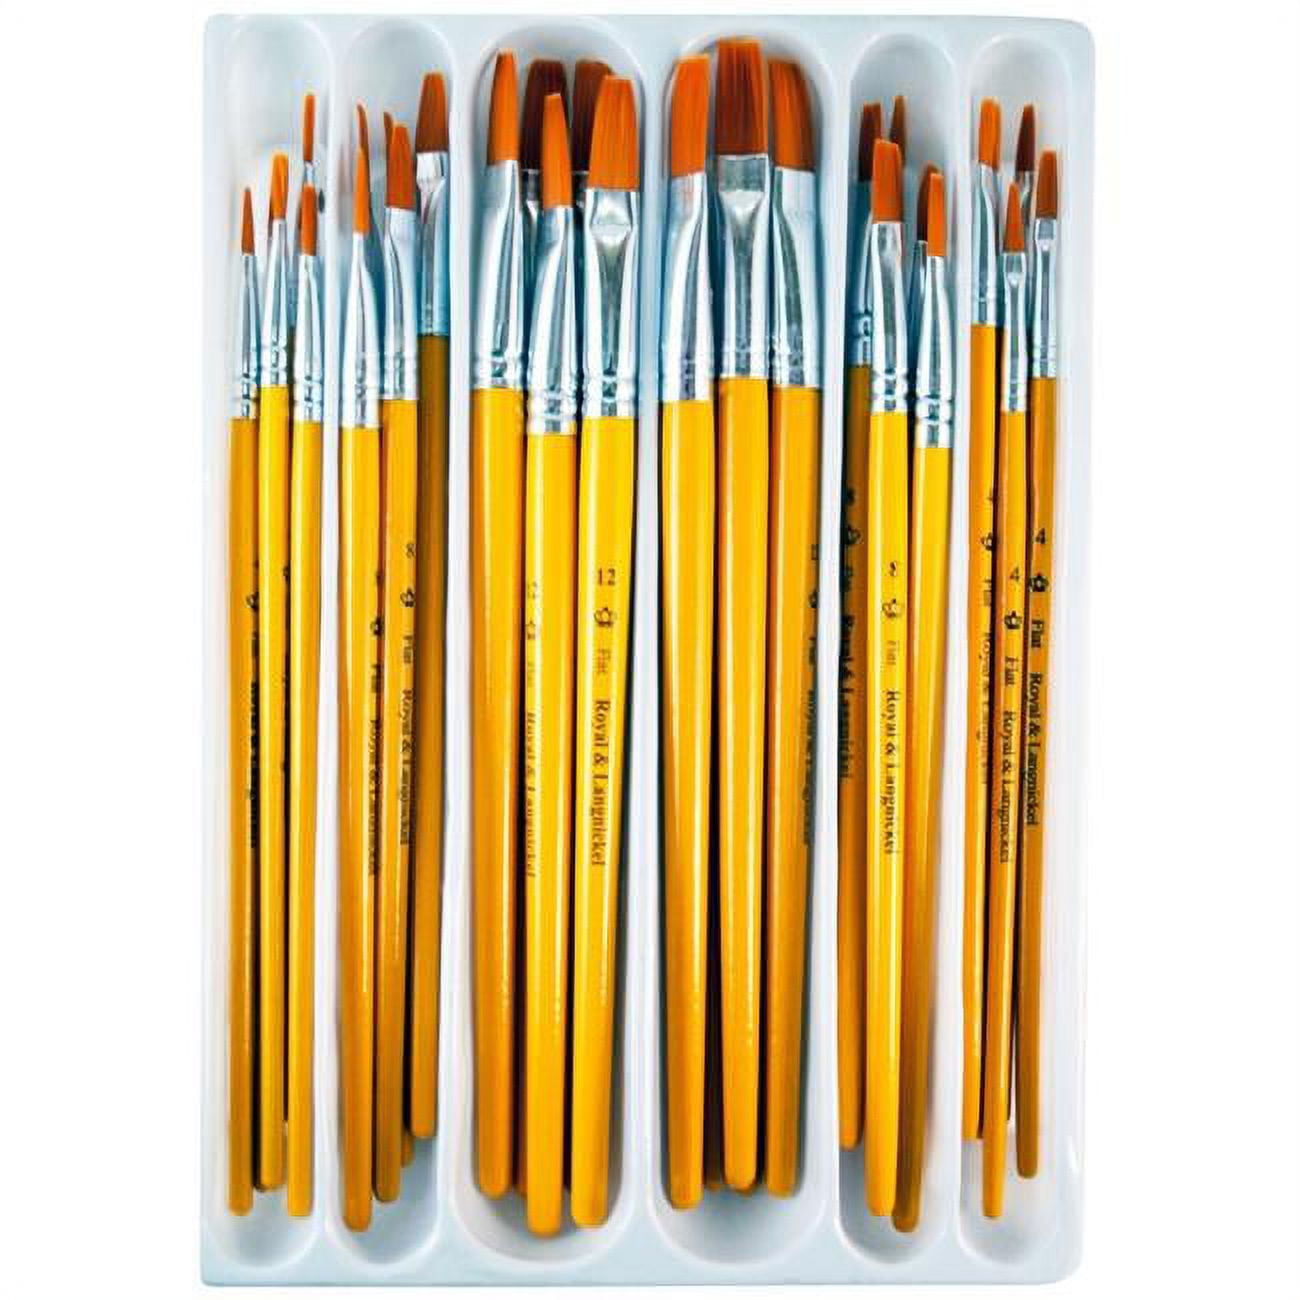 U.S. Art Supply 12 Piece Special Effects Artist Paint Brush Set - Professional Taklon Synthetic FX Brushes, Ribbon, Muti-Liner, Angular - Create